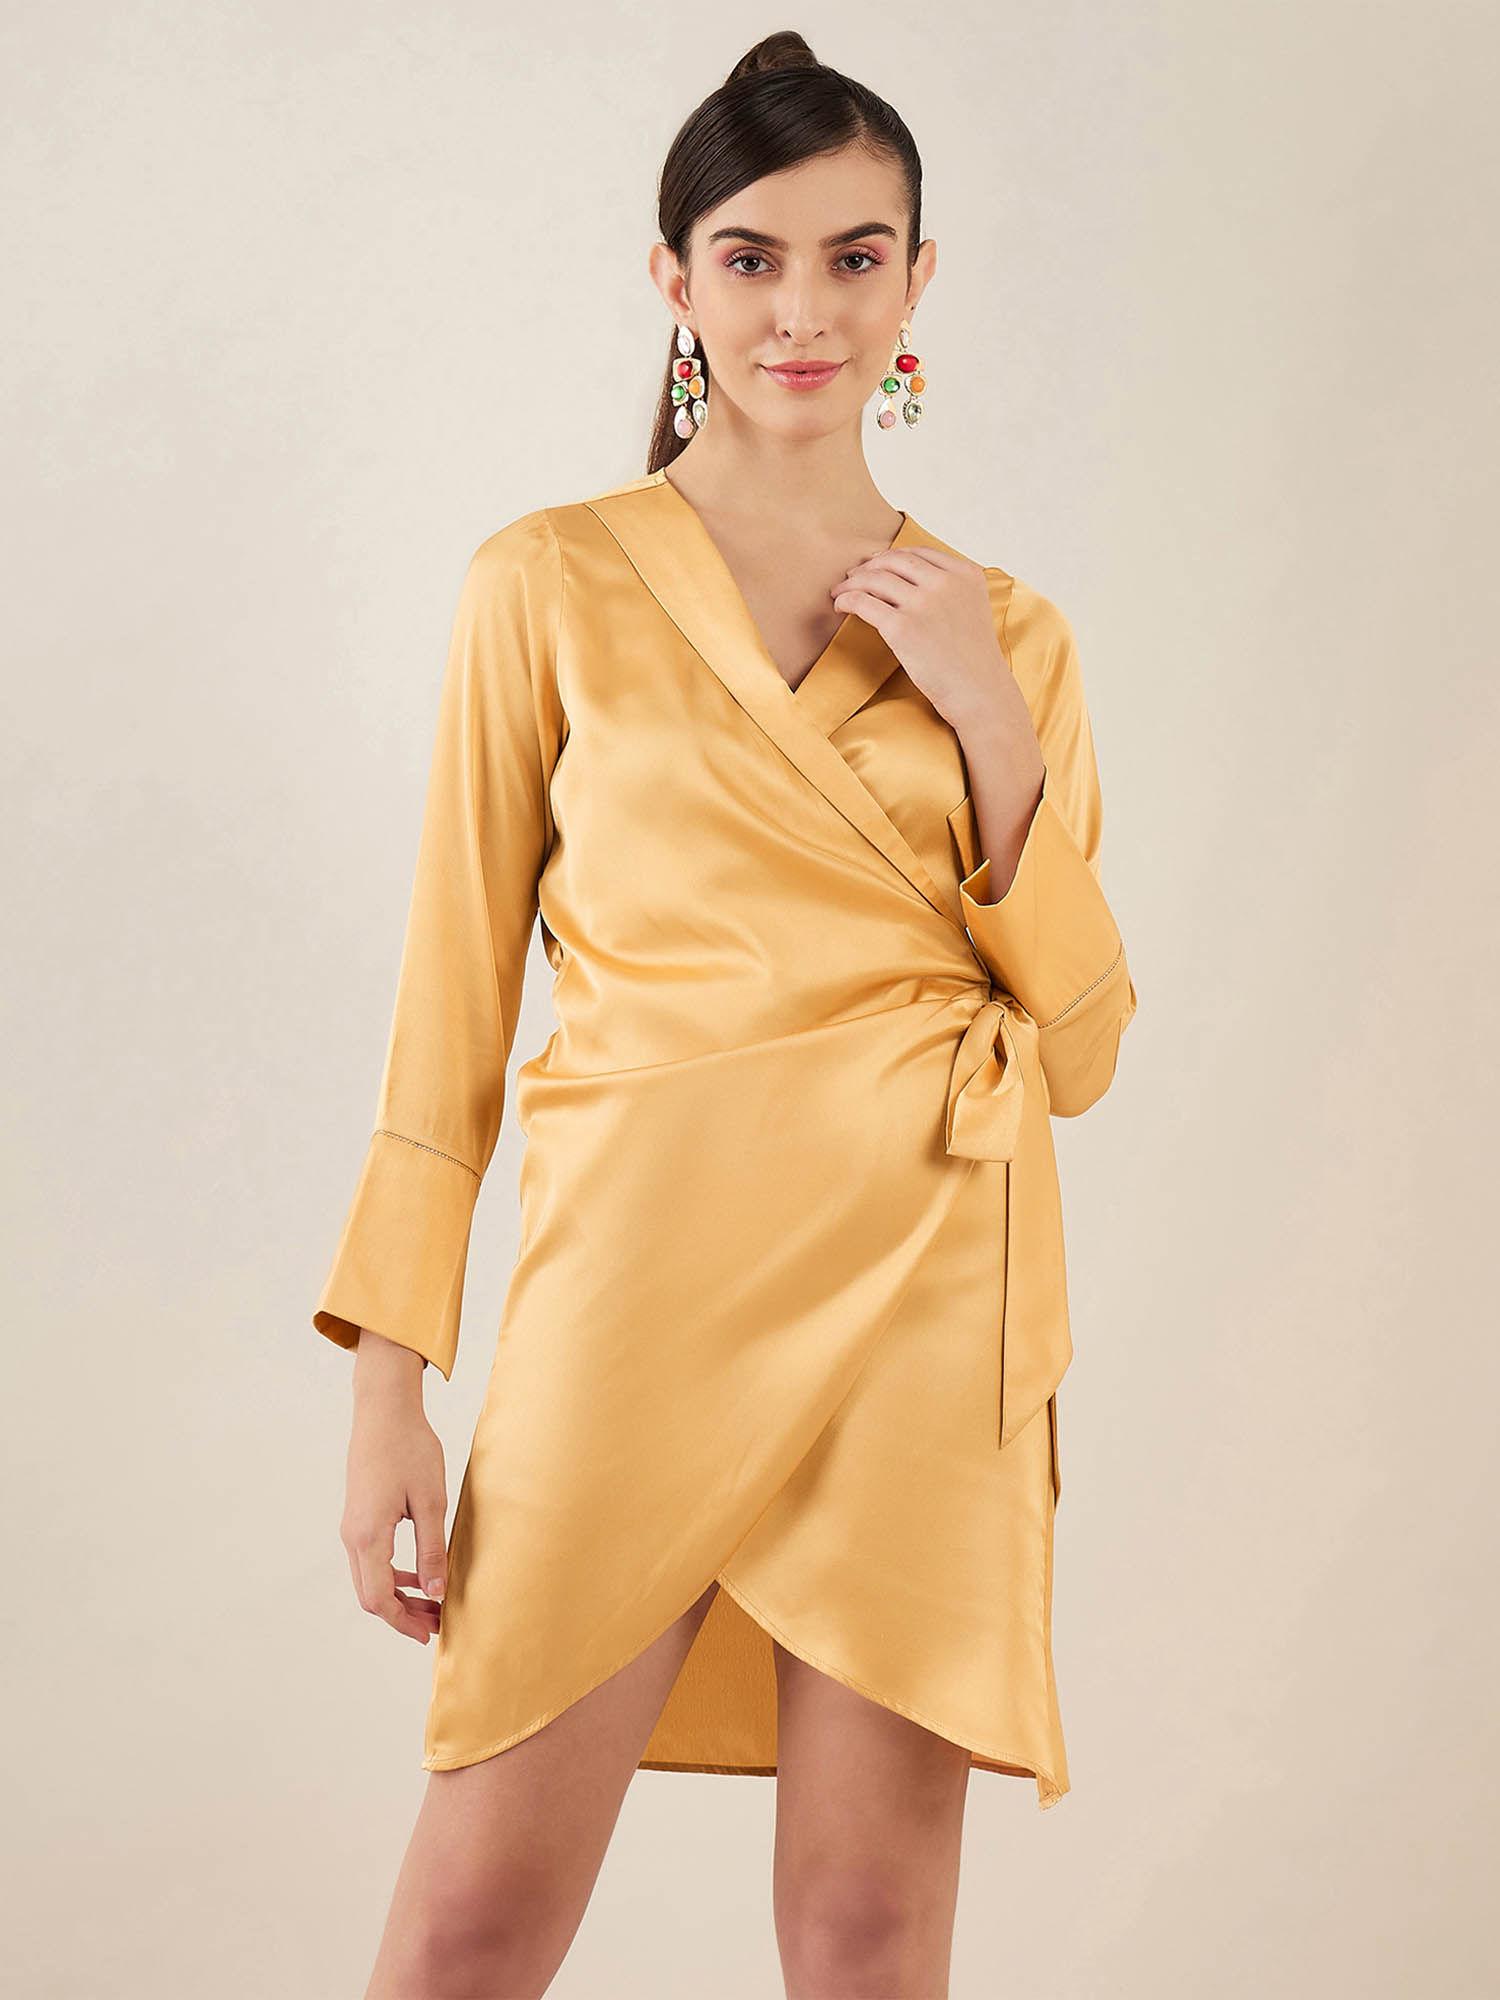 gold wrap around embellished satin short dress